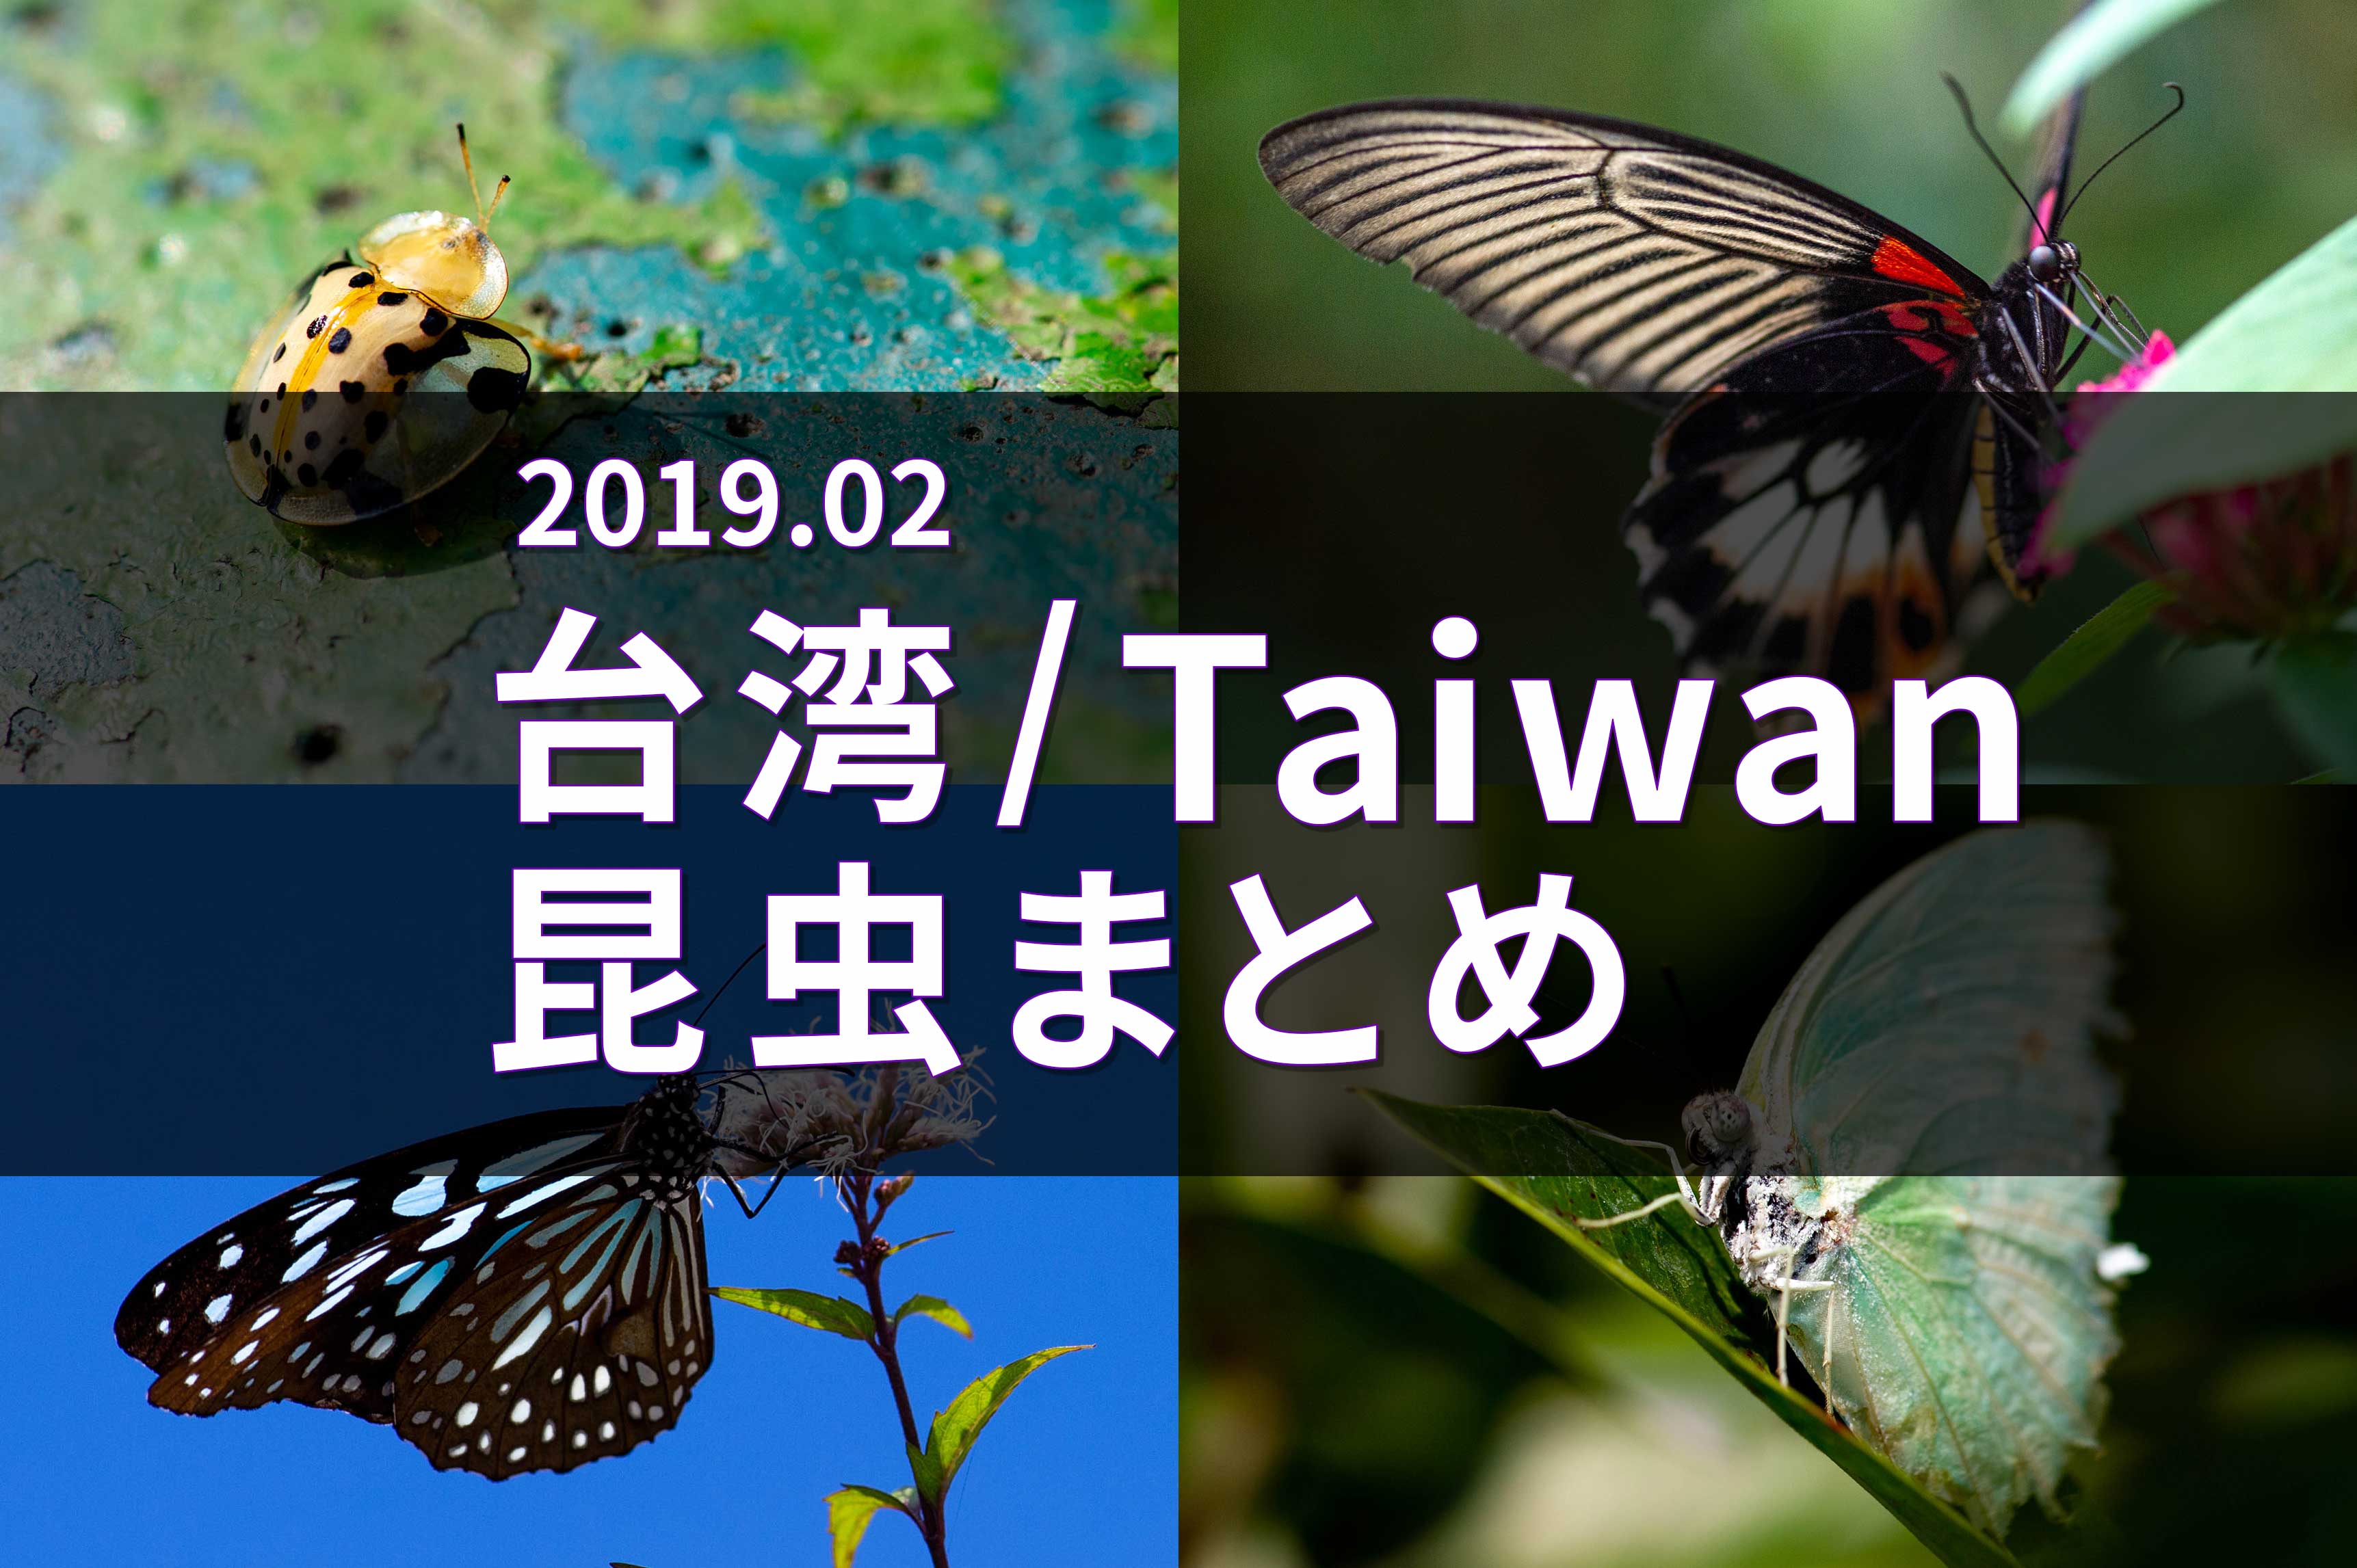 Z-20 内田春男 麗しき胡蝶の島よ永えに 台湾の蝶と自然と - アート